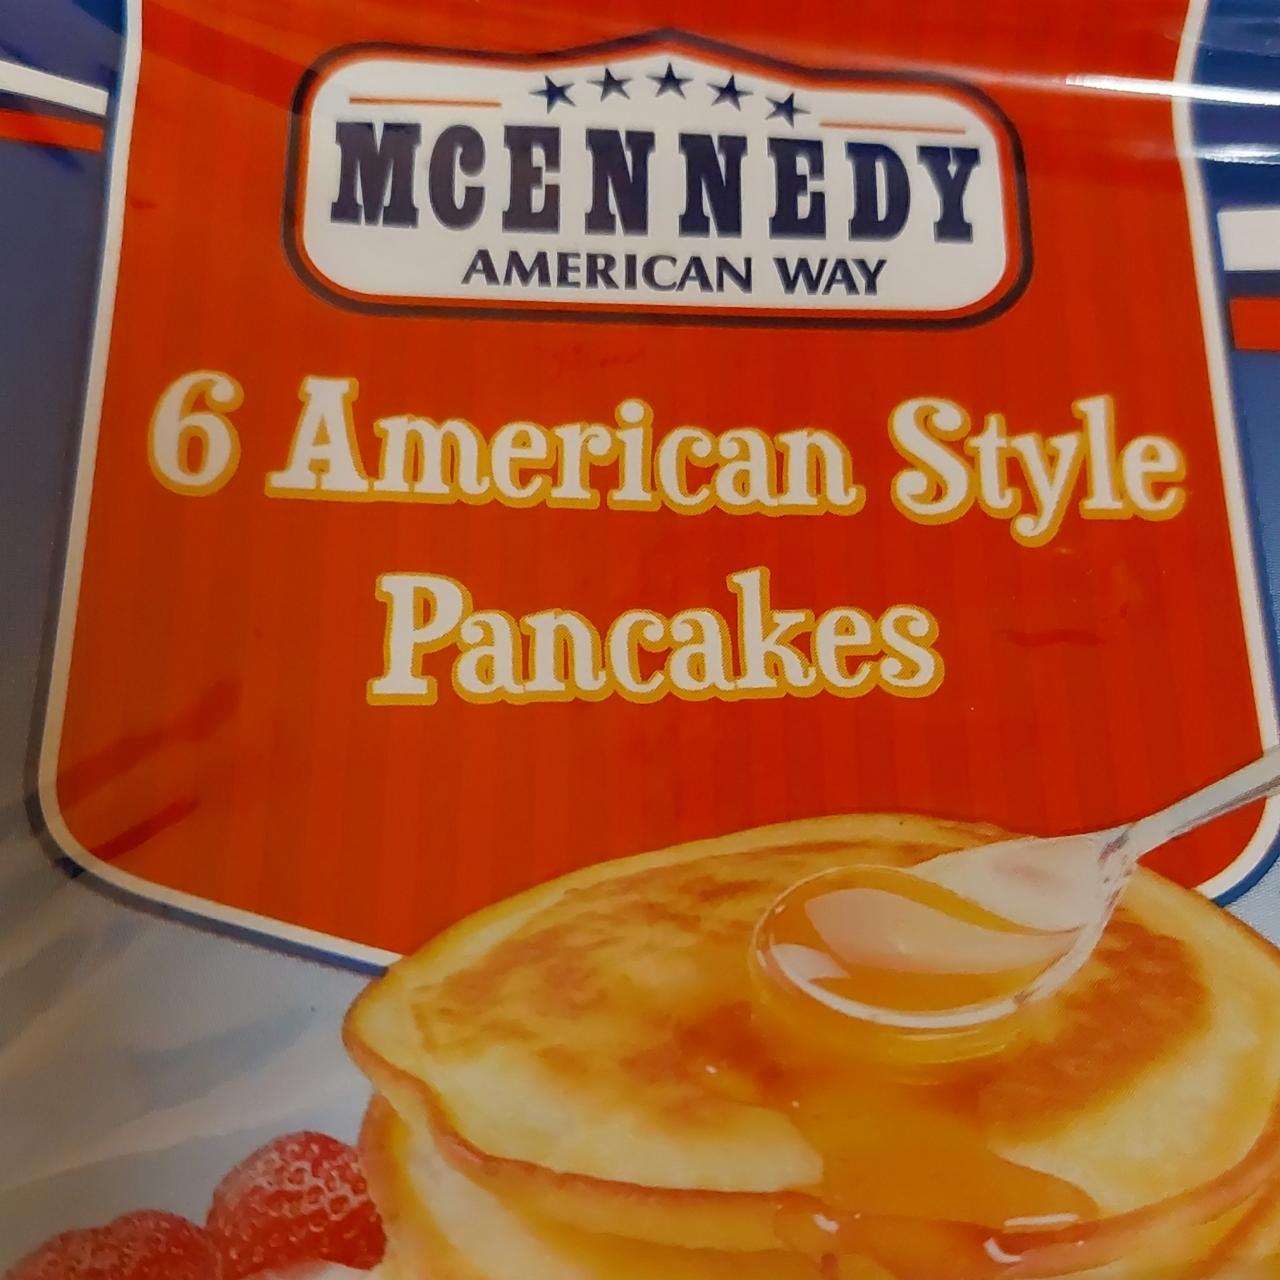 Zdjęcia - 6 American Style Pancakes McEnnedy American Way